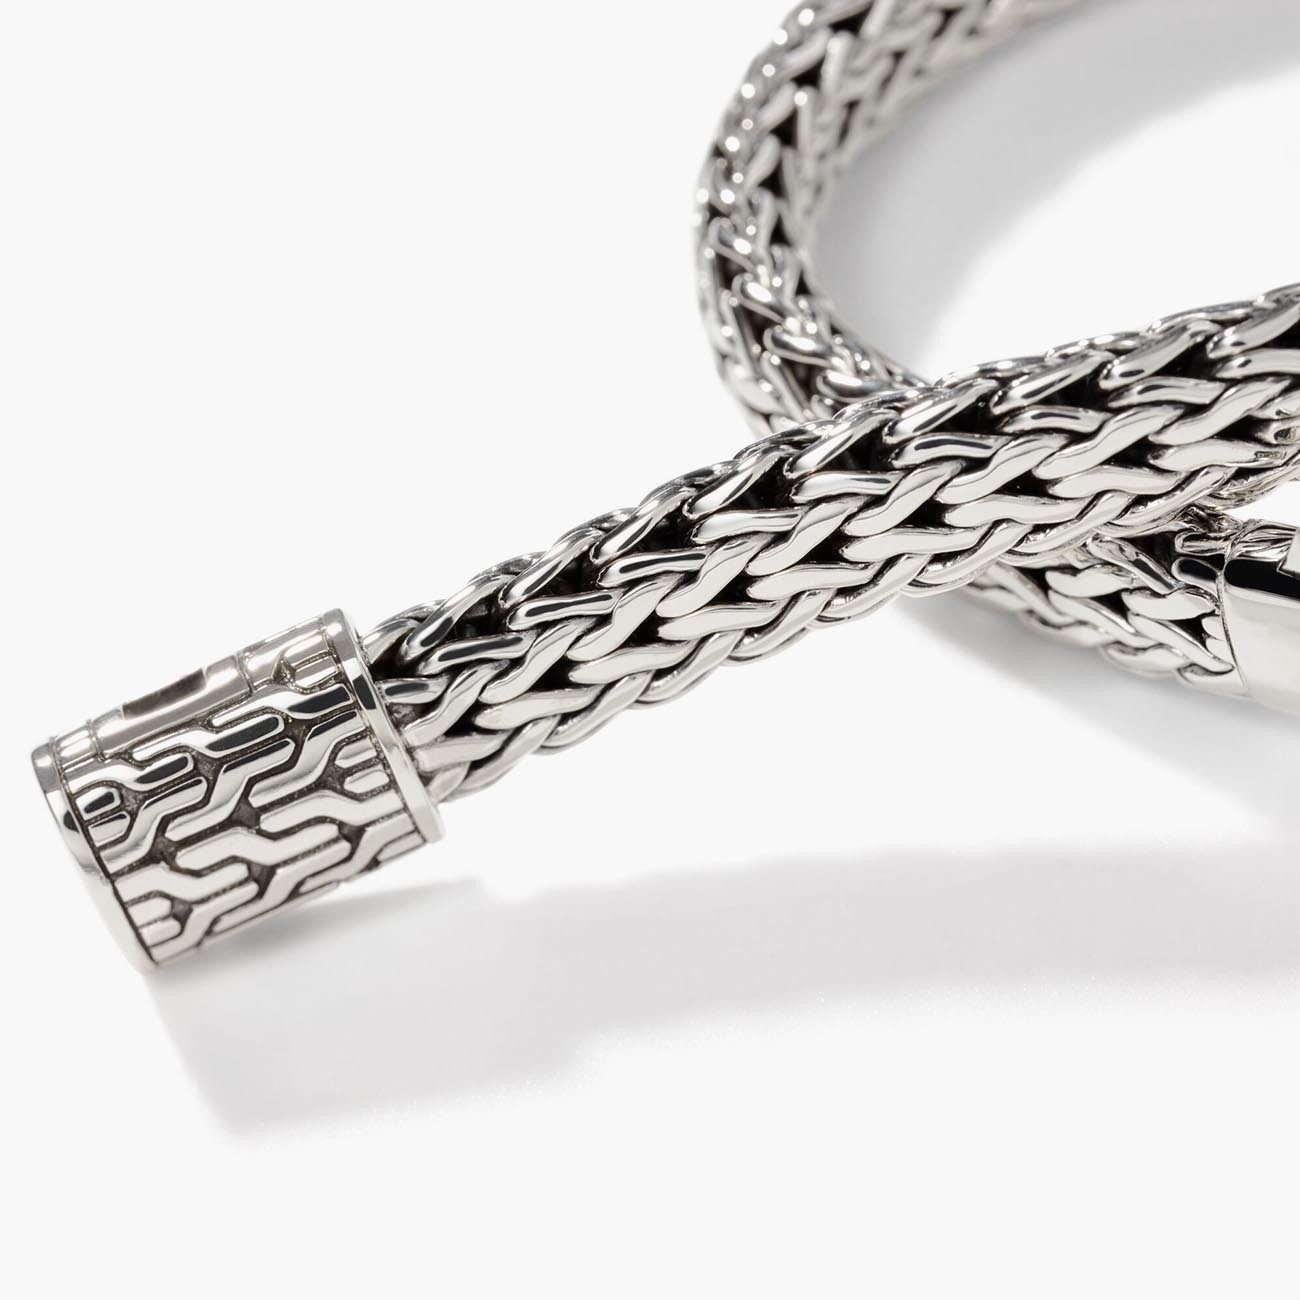 Silver Diamond Tennis Bracelet for Men - Tennis Bracelets | Twistedpendant